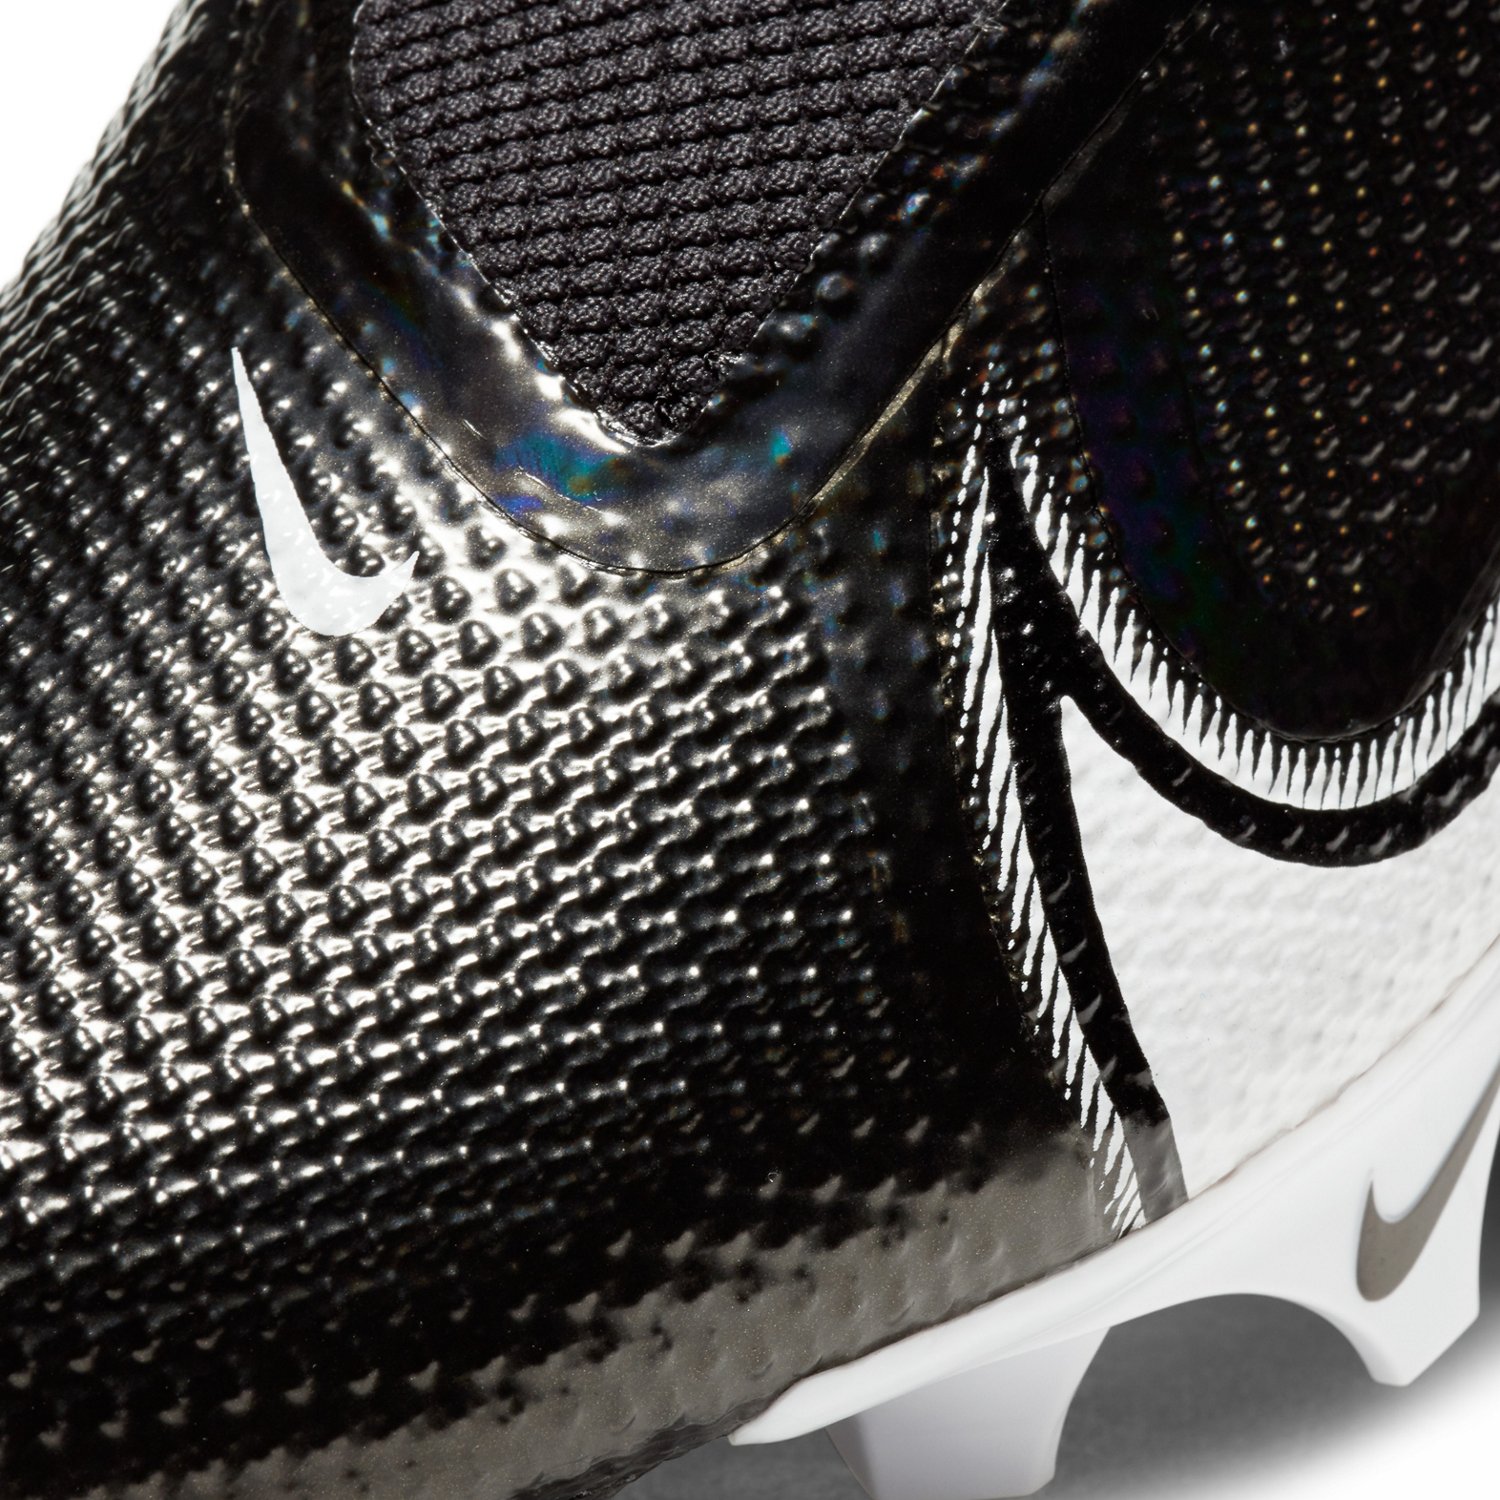 Spider” Nike Vapor Edge Pro 360 Cleats